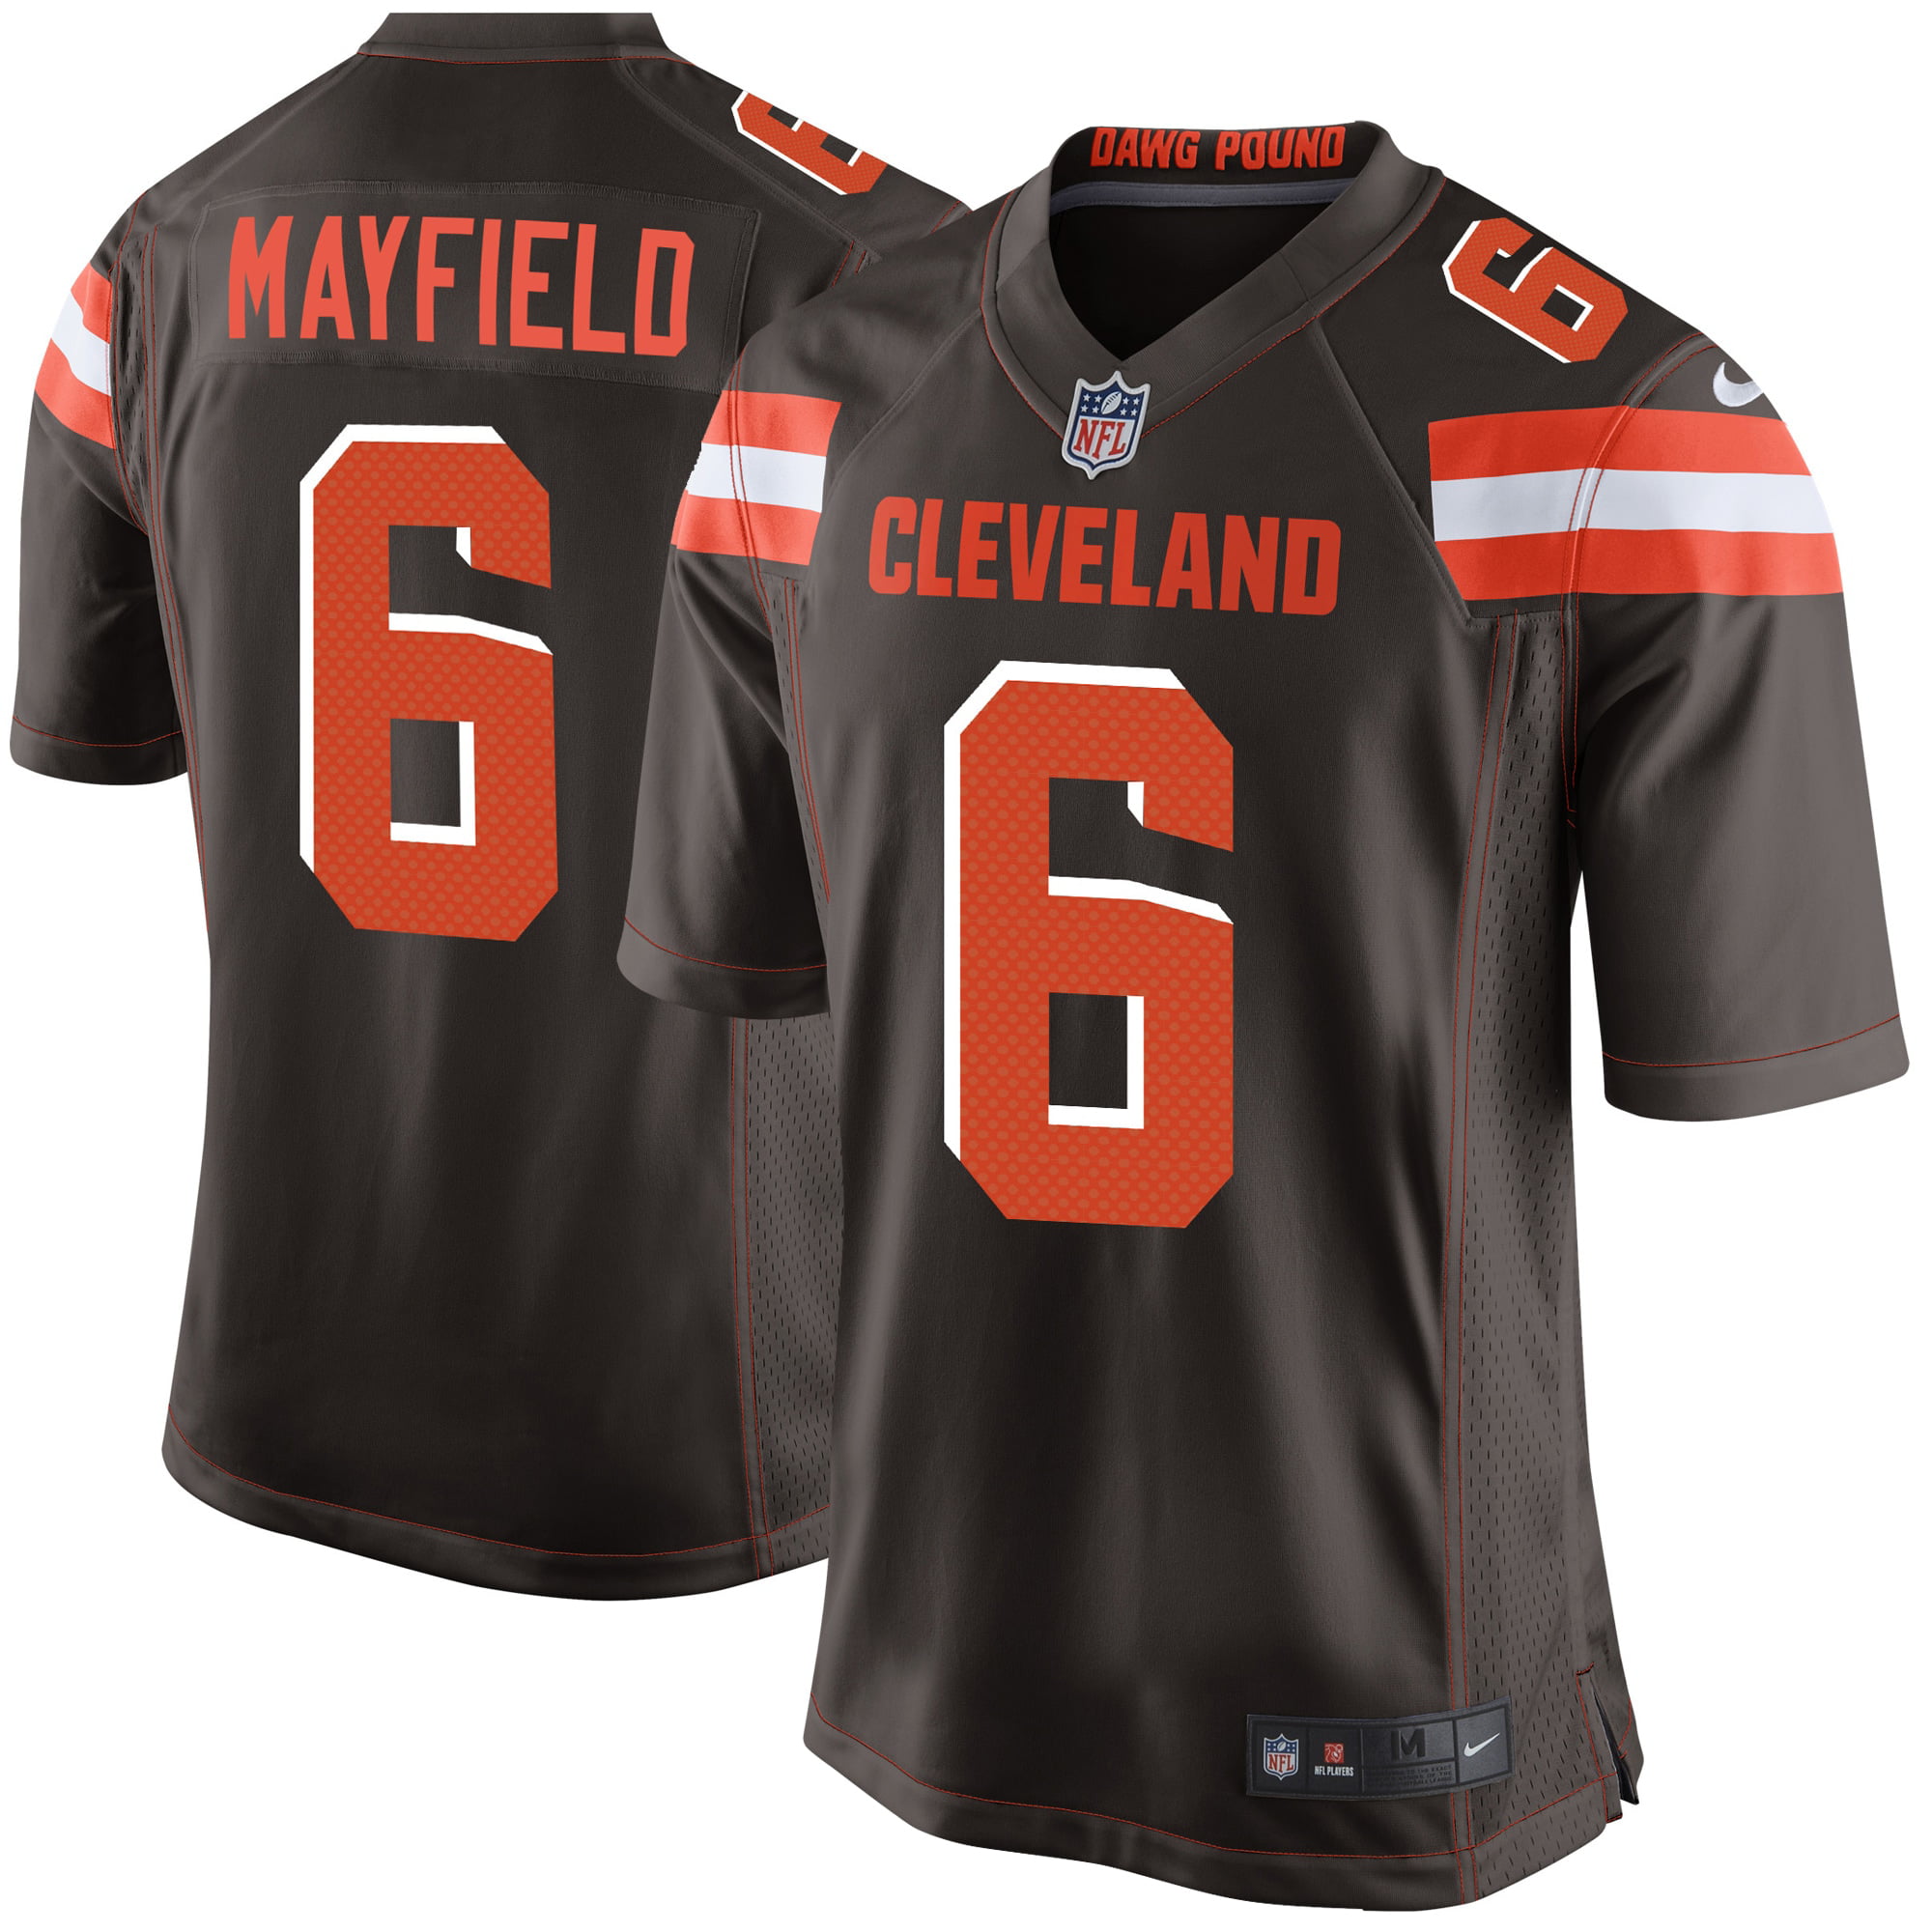 Baker Mayfield Cleveland Browns Nike Youth Game Jersey - Brown - Walmart.com - Walmart.com